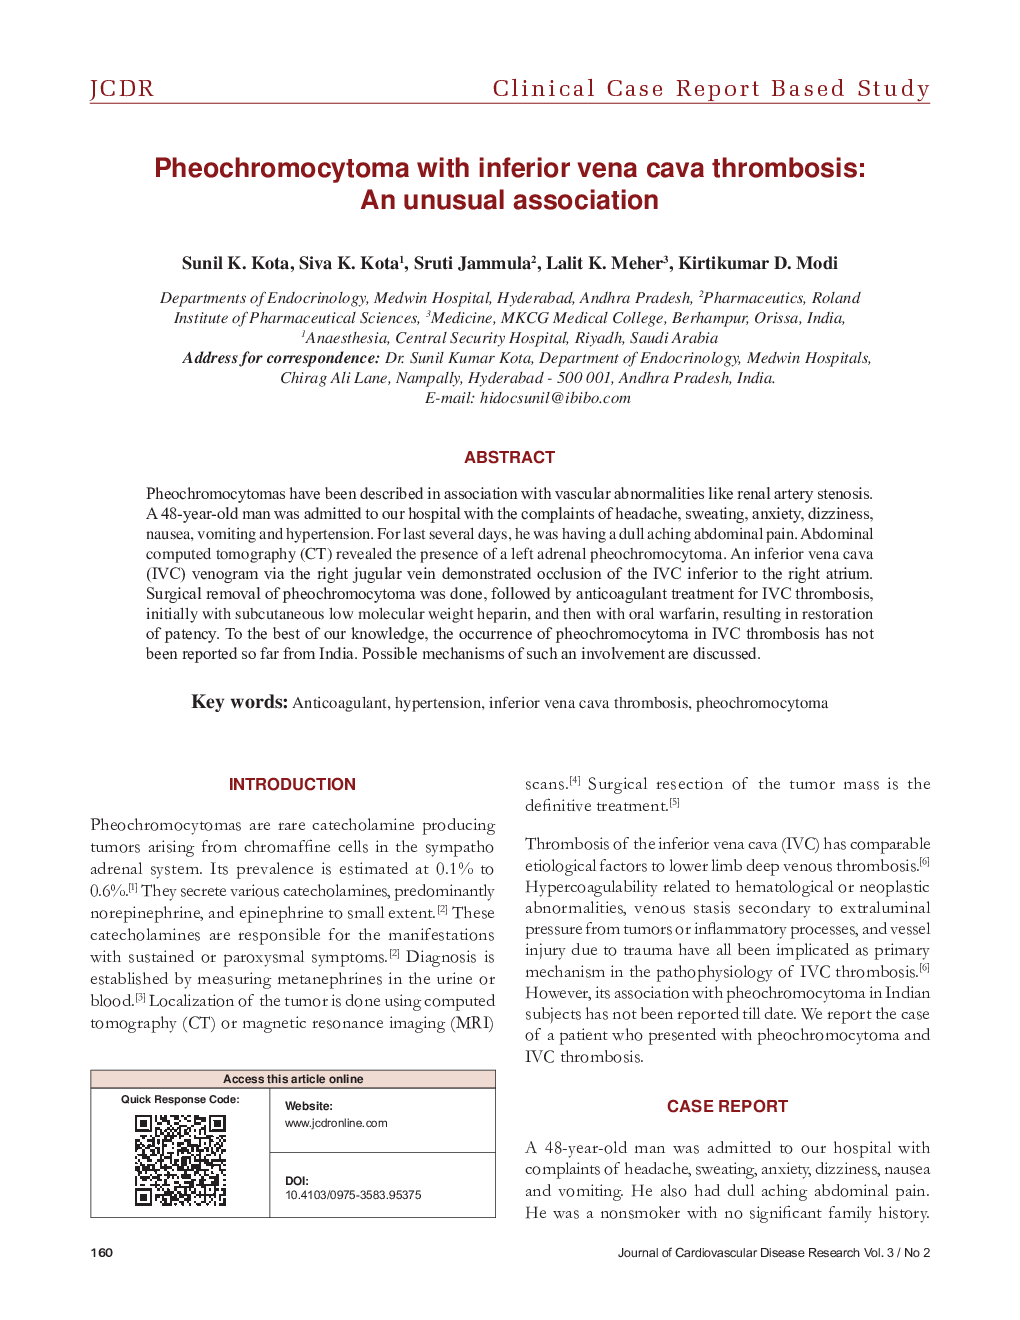 Pheochromocytoma with inferior vena cava thrombosis: An unusual association